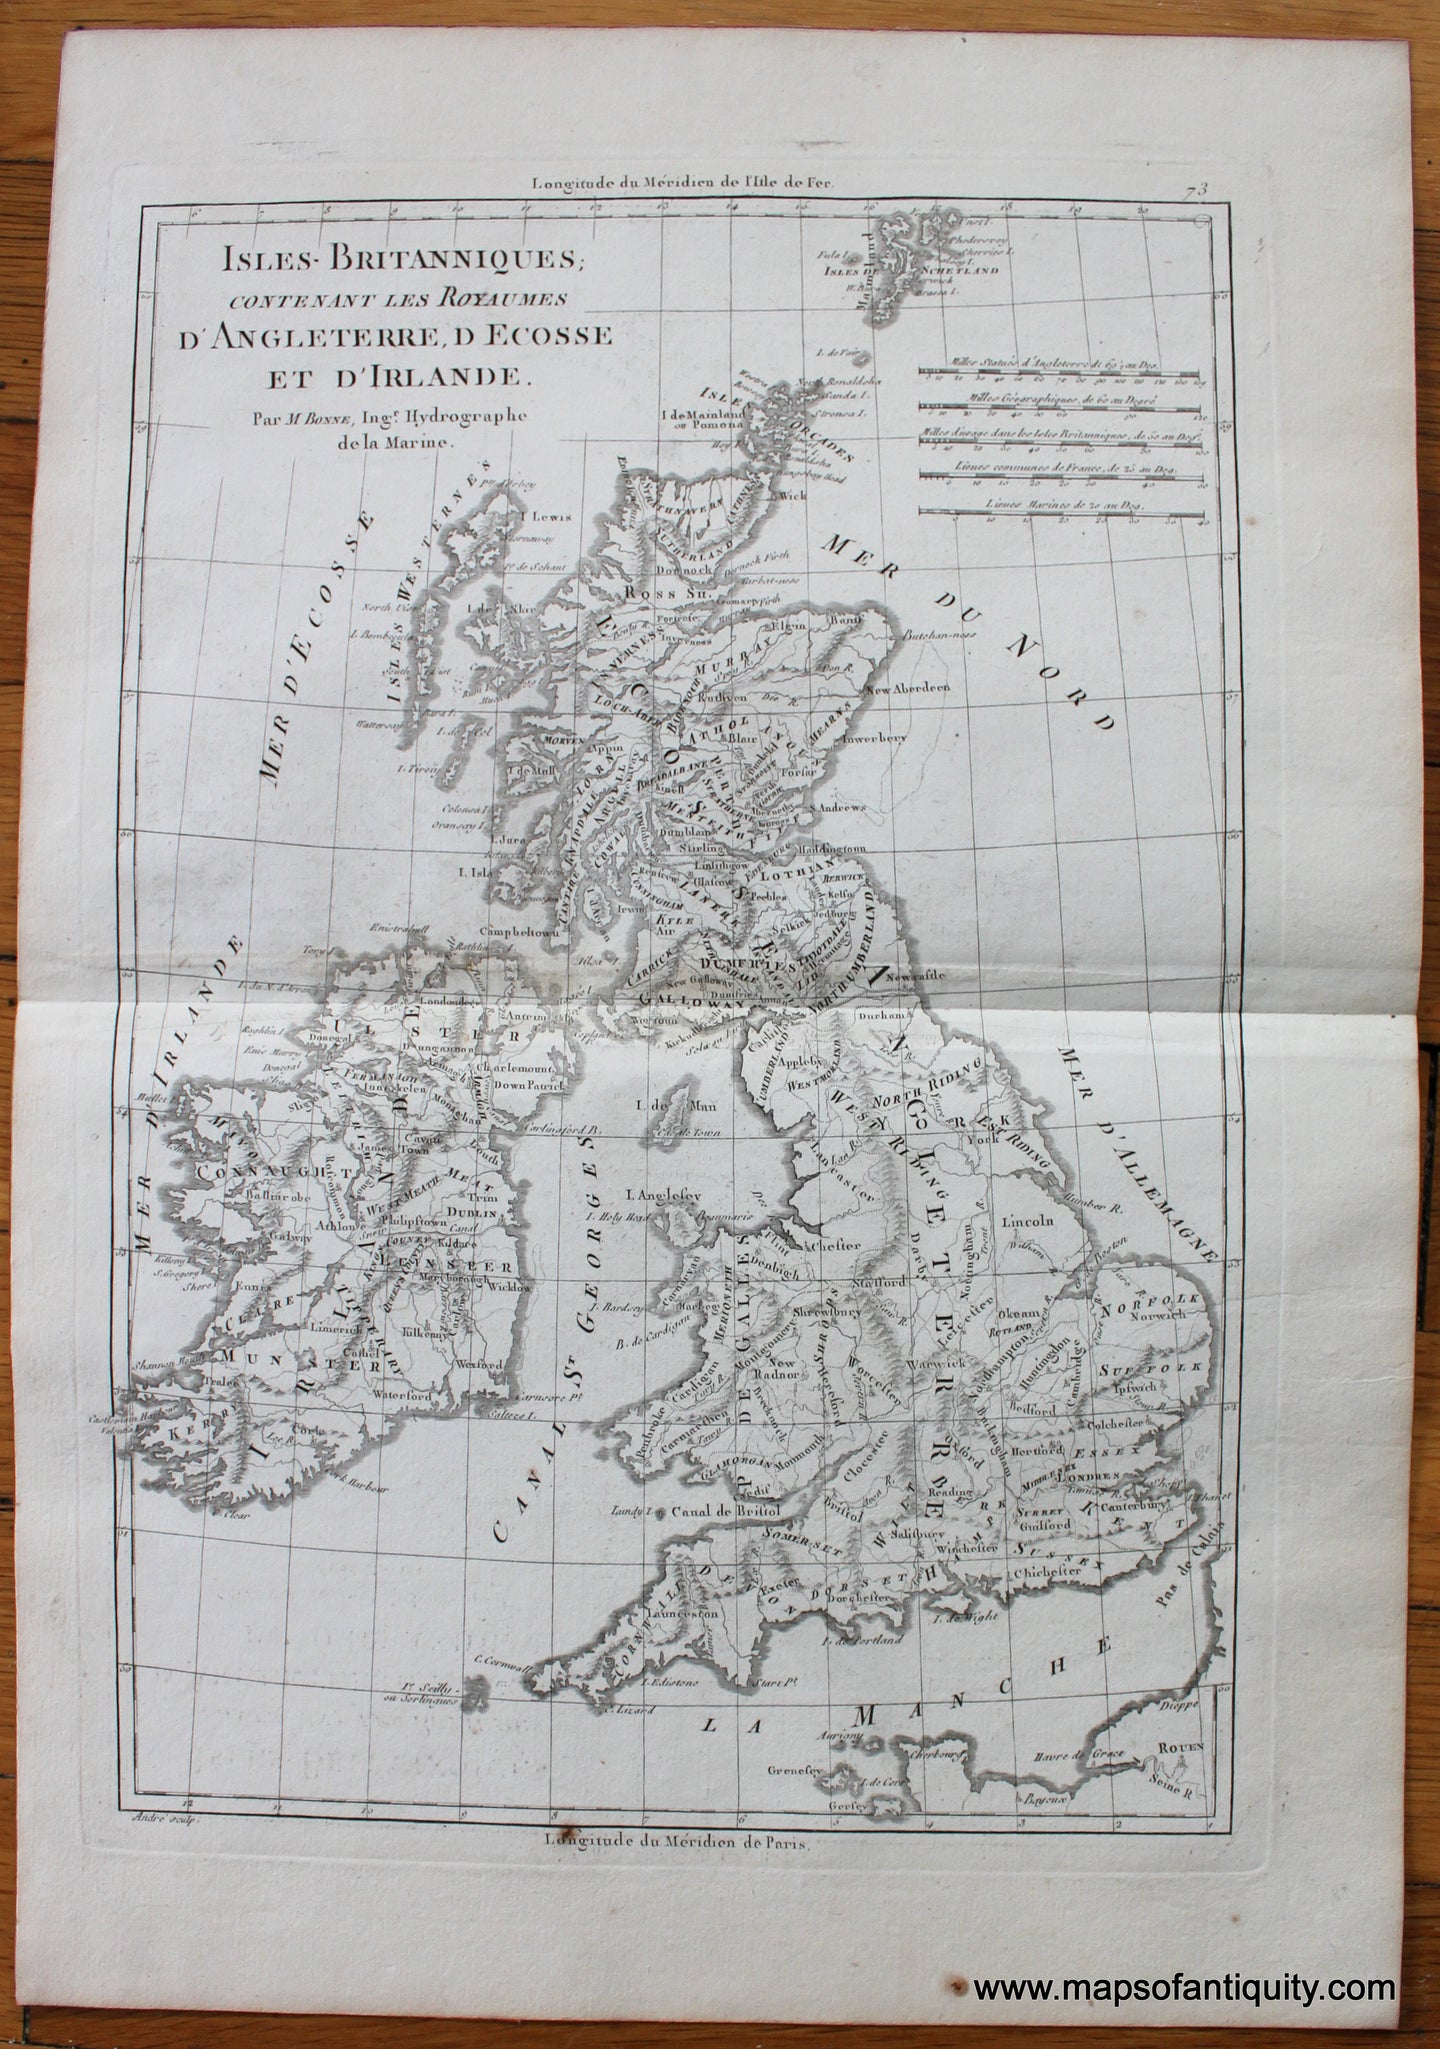 Genuine-Antique-Map-Isles-Britanniques;-contenant-les-Royaumes-d'Angleterre-d-Ecosse-et-d'Irlande-Europe-United-Kingdom-1787-Bonne-and-Desmarest-Maps-Of-Antiquity-1800s-19th-century